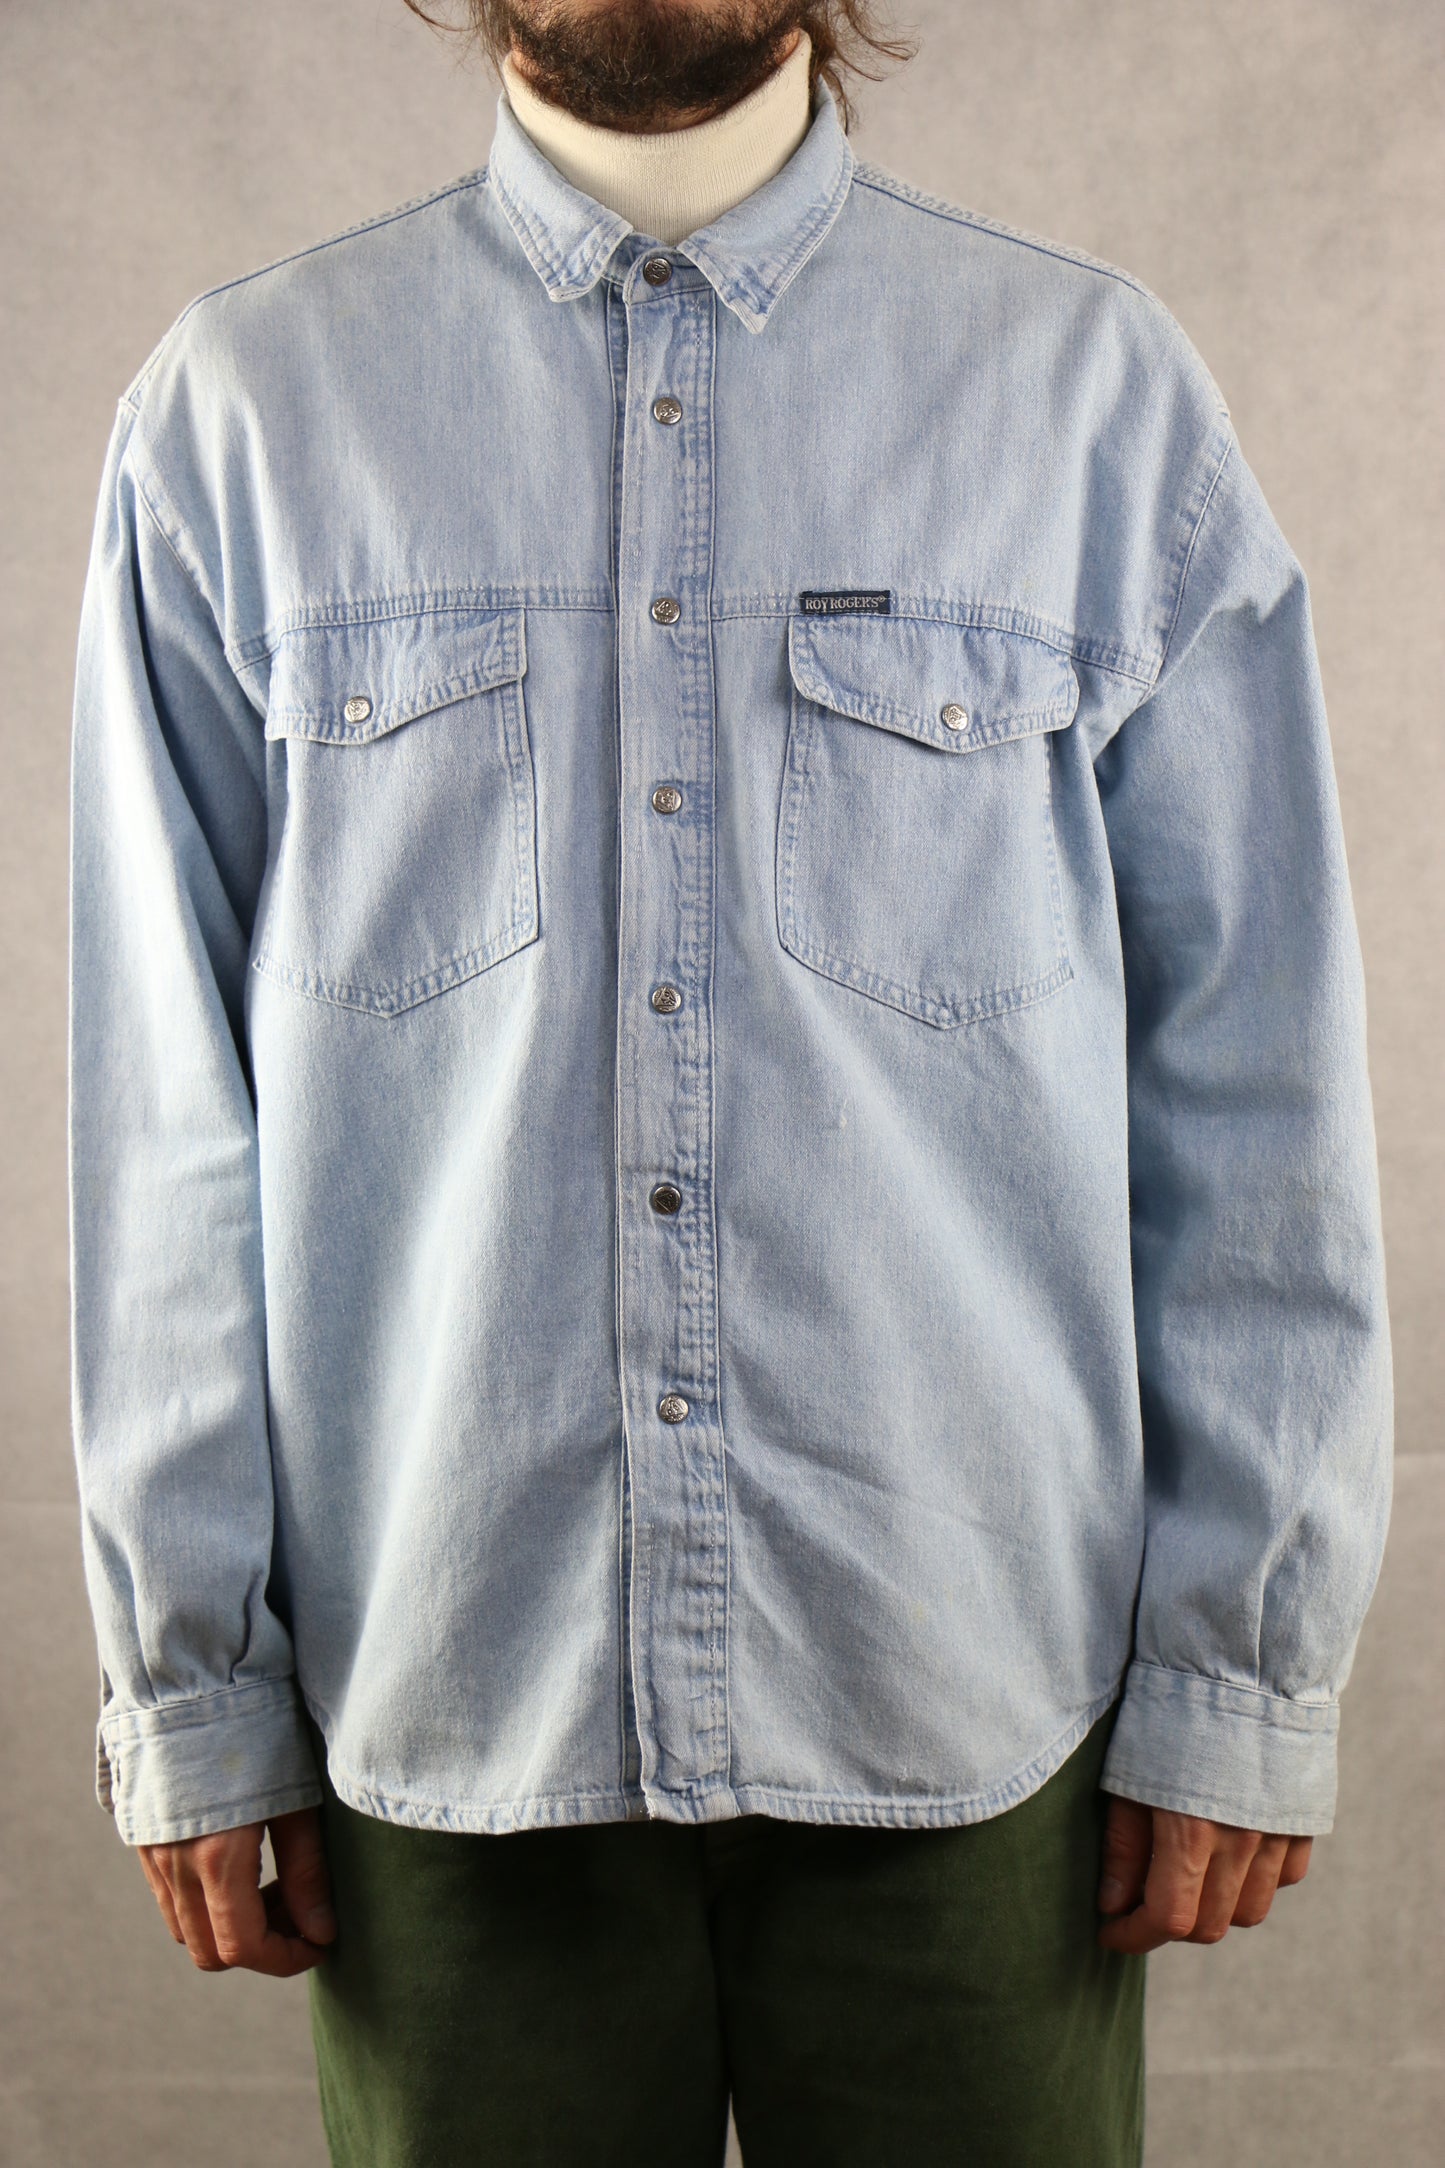 Roy Rogers Denim Shirt - vintage clothing clochard92.com